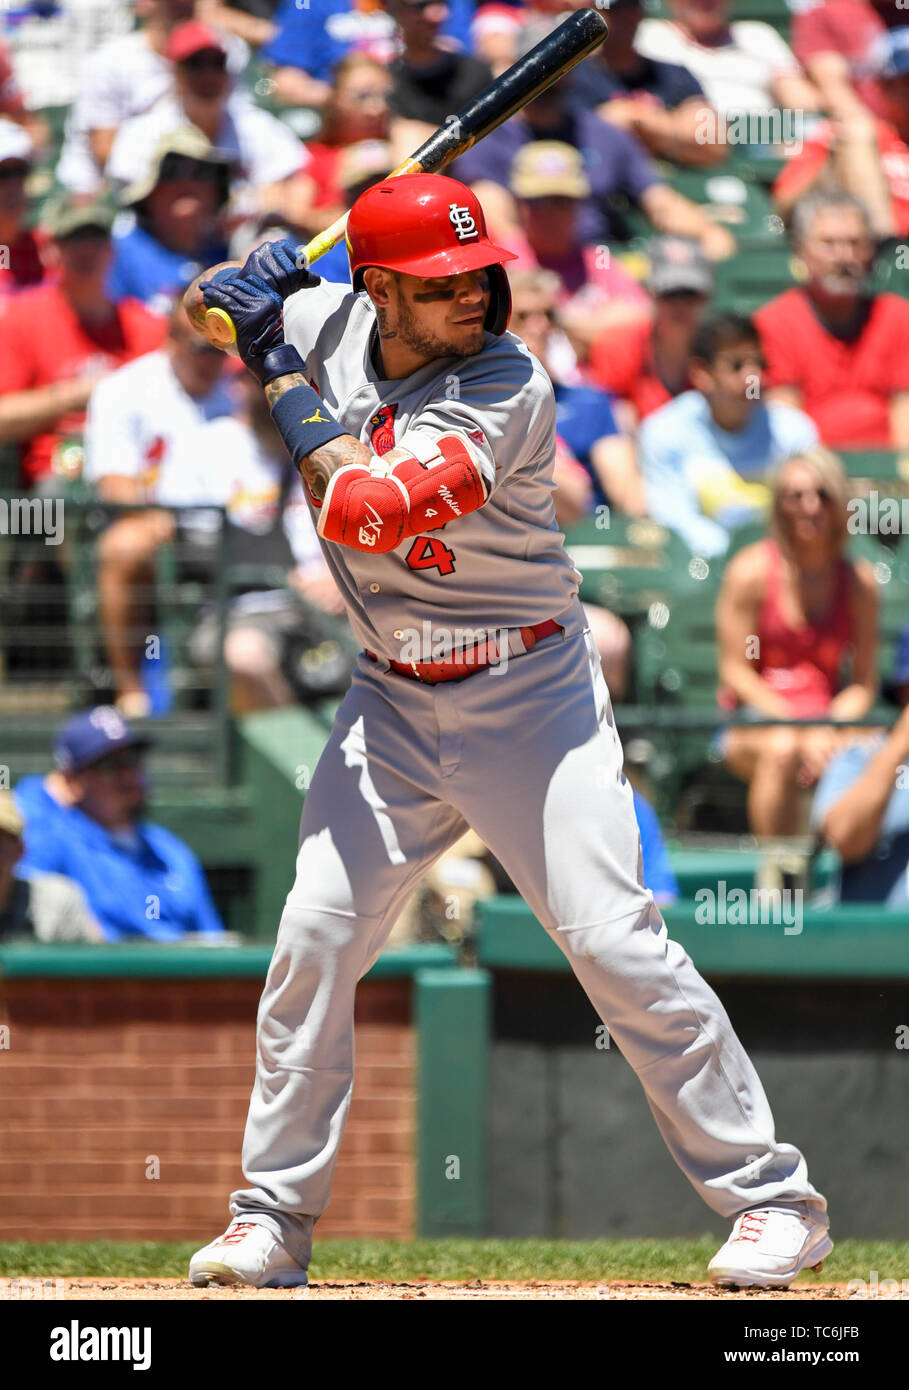 May 19, 2019: St. Louis Cardinals catcher Yadier Molina #4 at bat during an interleague MLB game ...